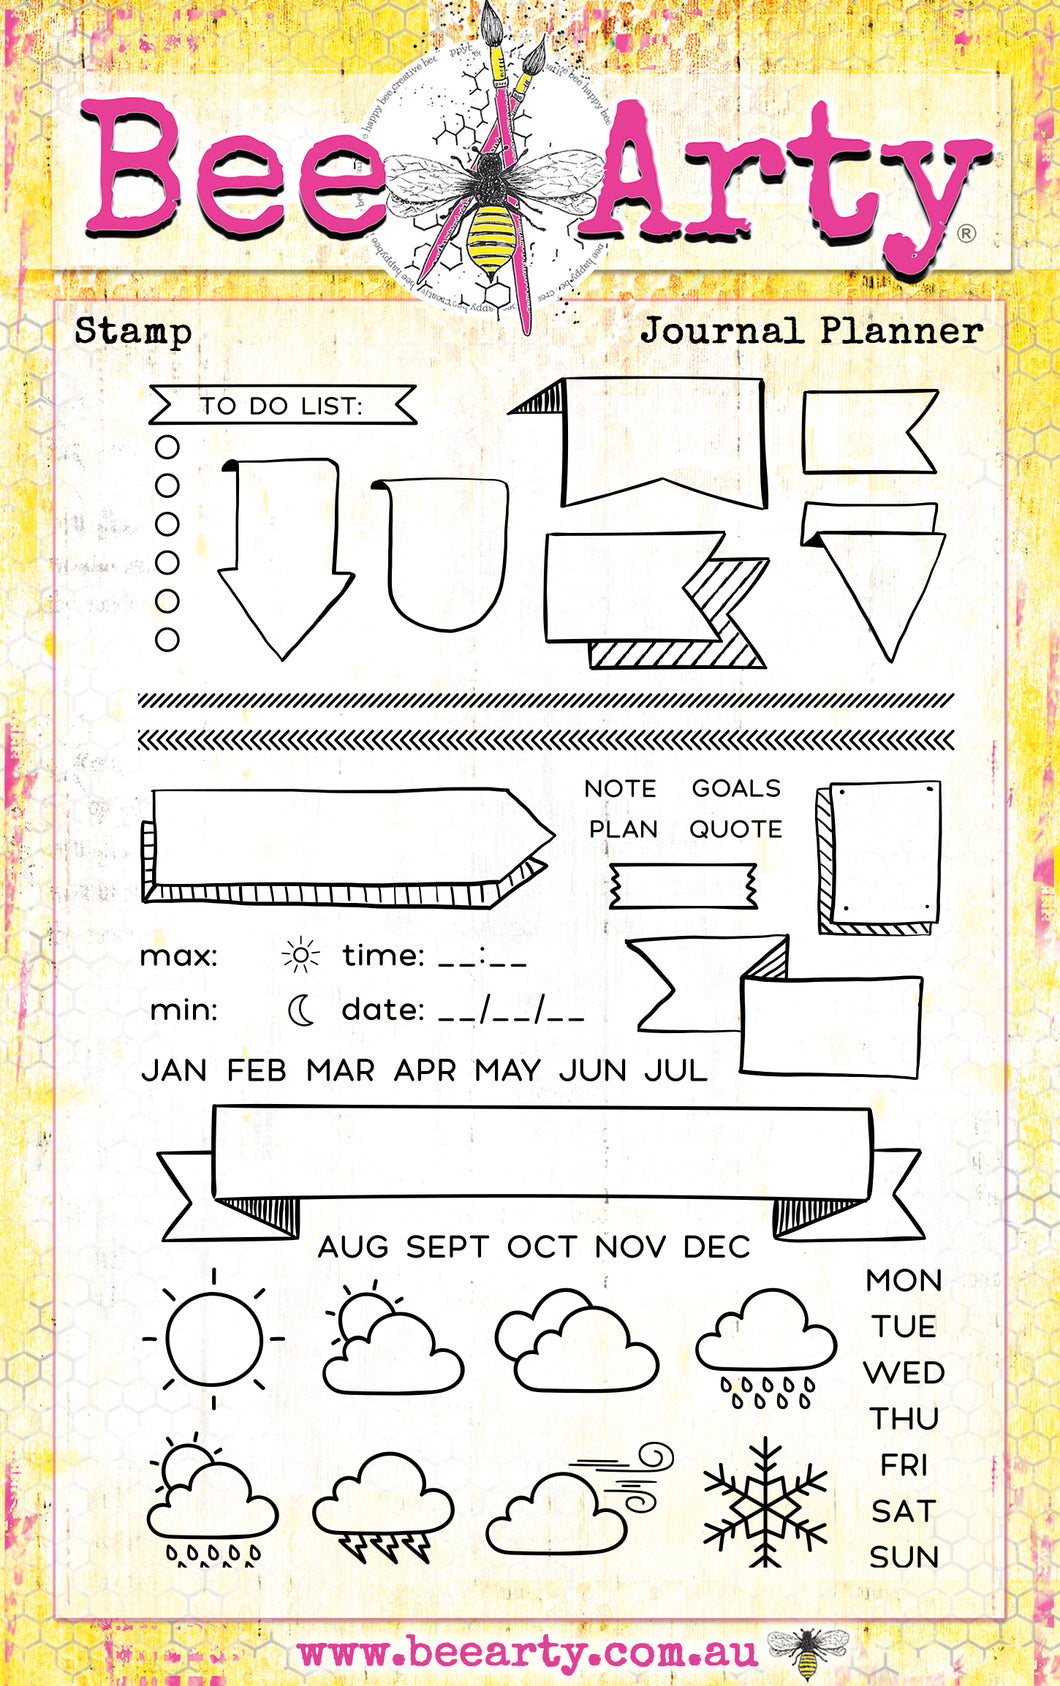 Journal Planner - Clear Stamp Set